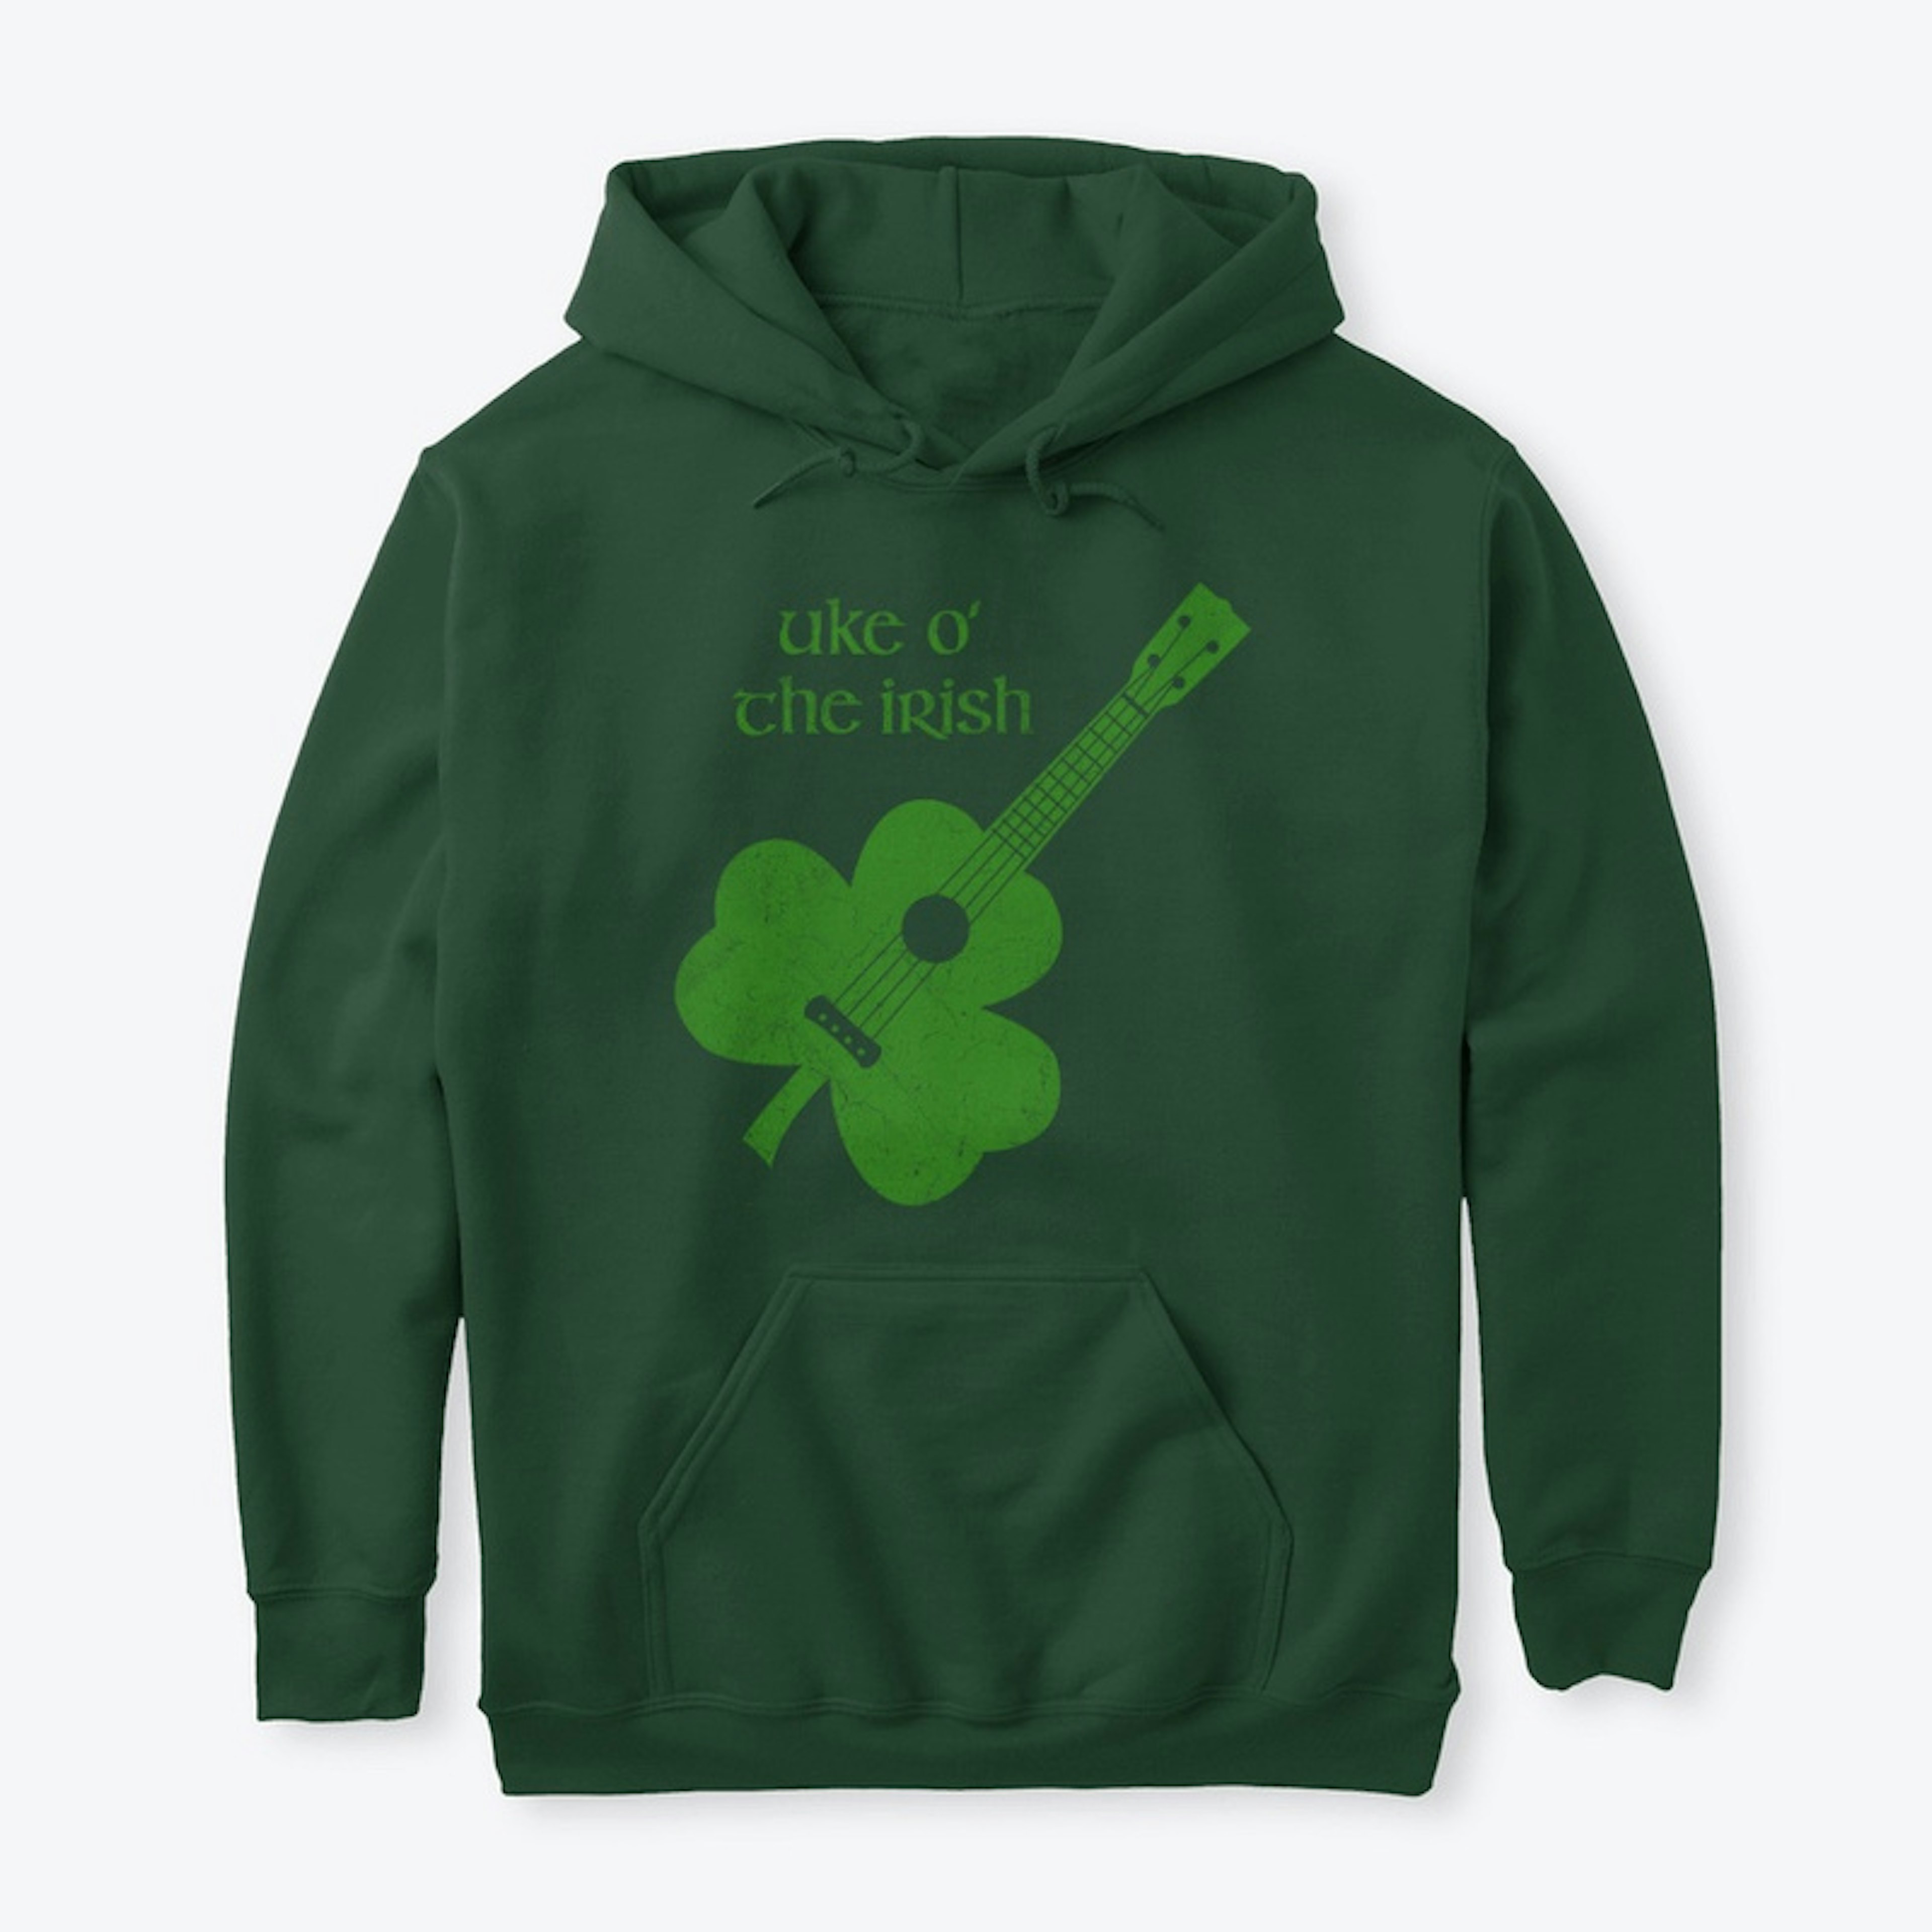 Uke O' The Irish Design